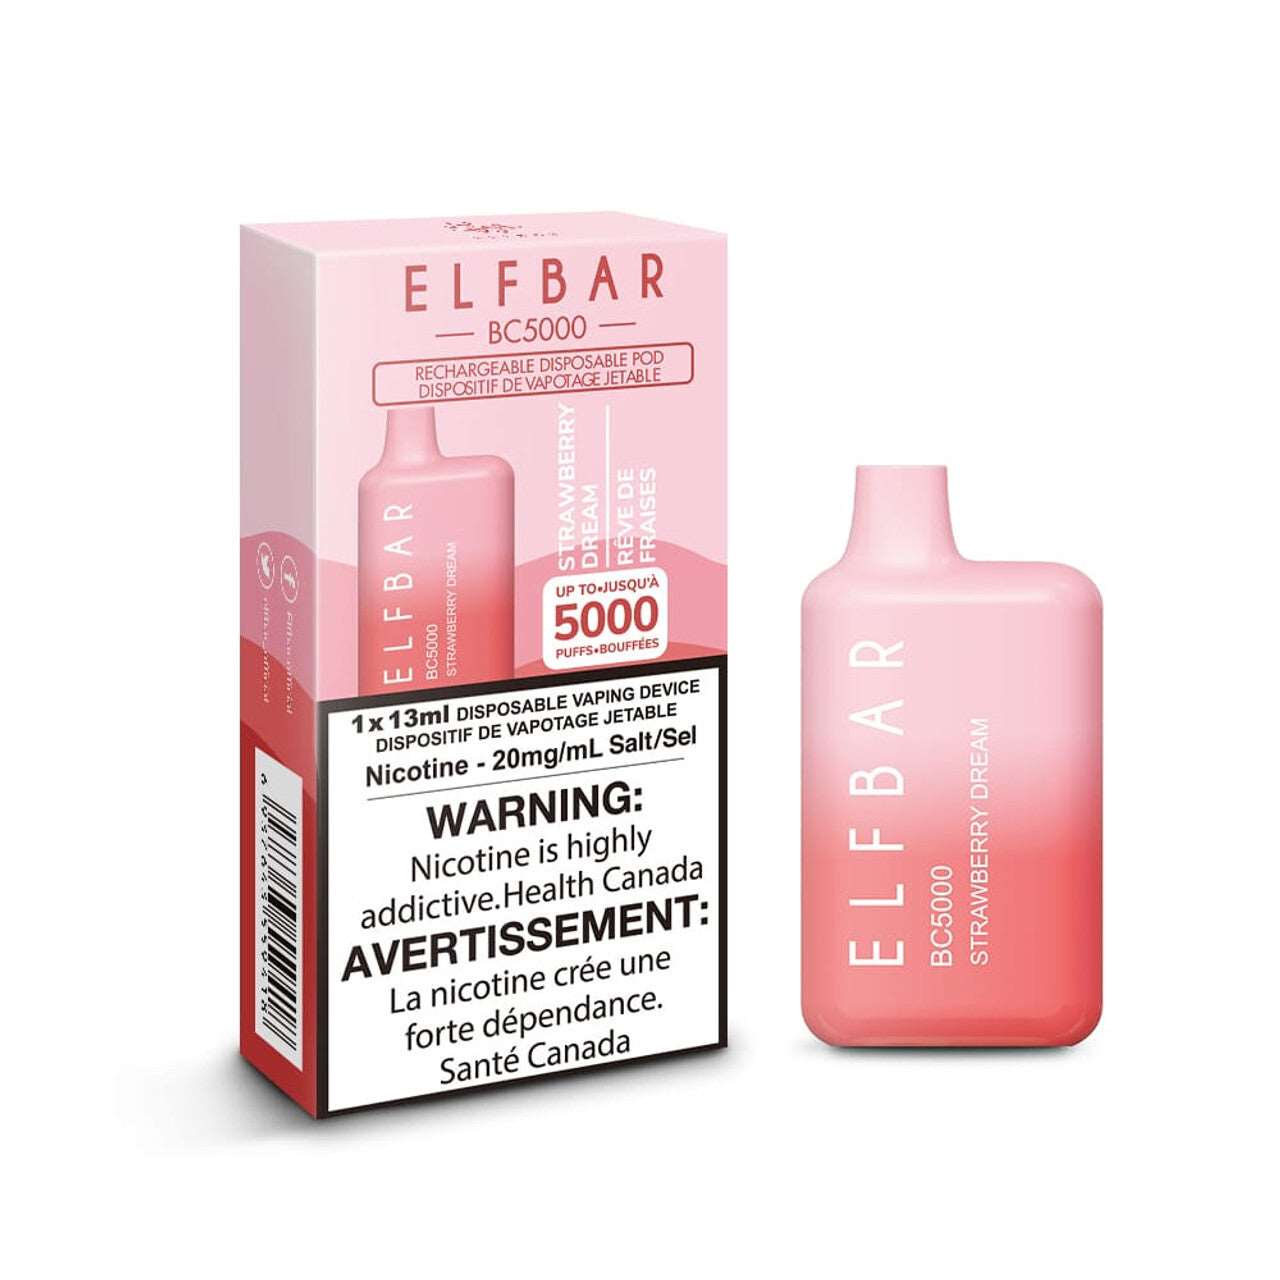 ELF BAR BC5000 - Strawberry Dream - Clutch Vape